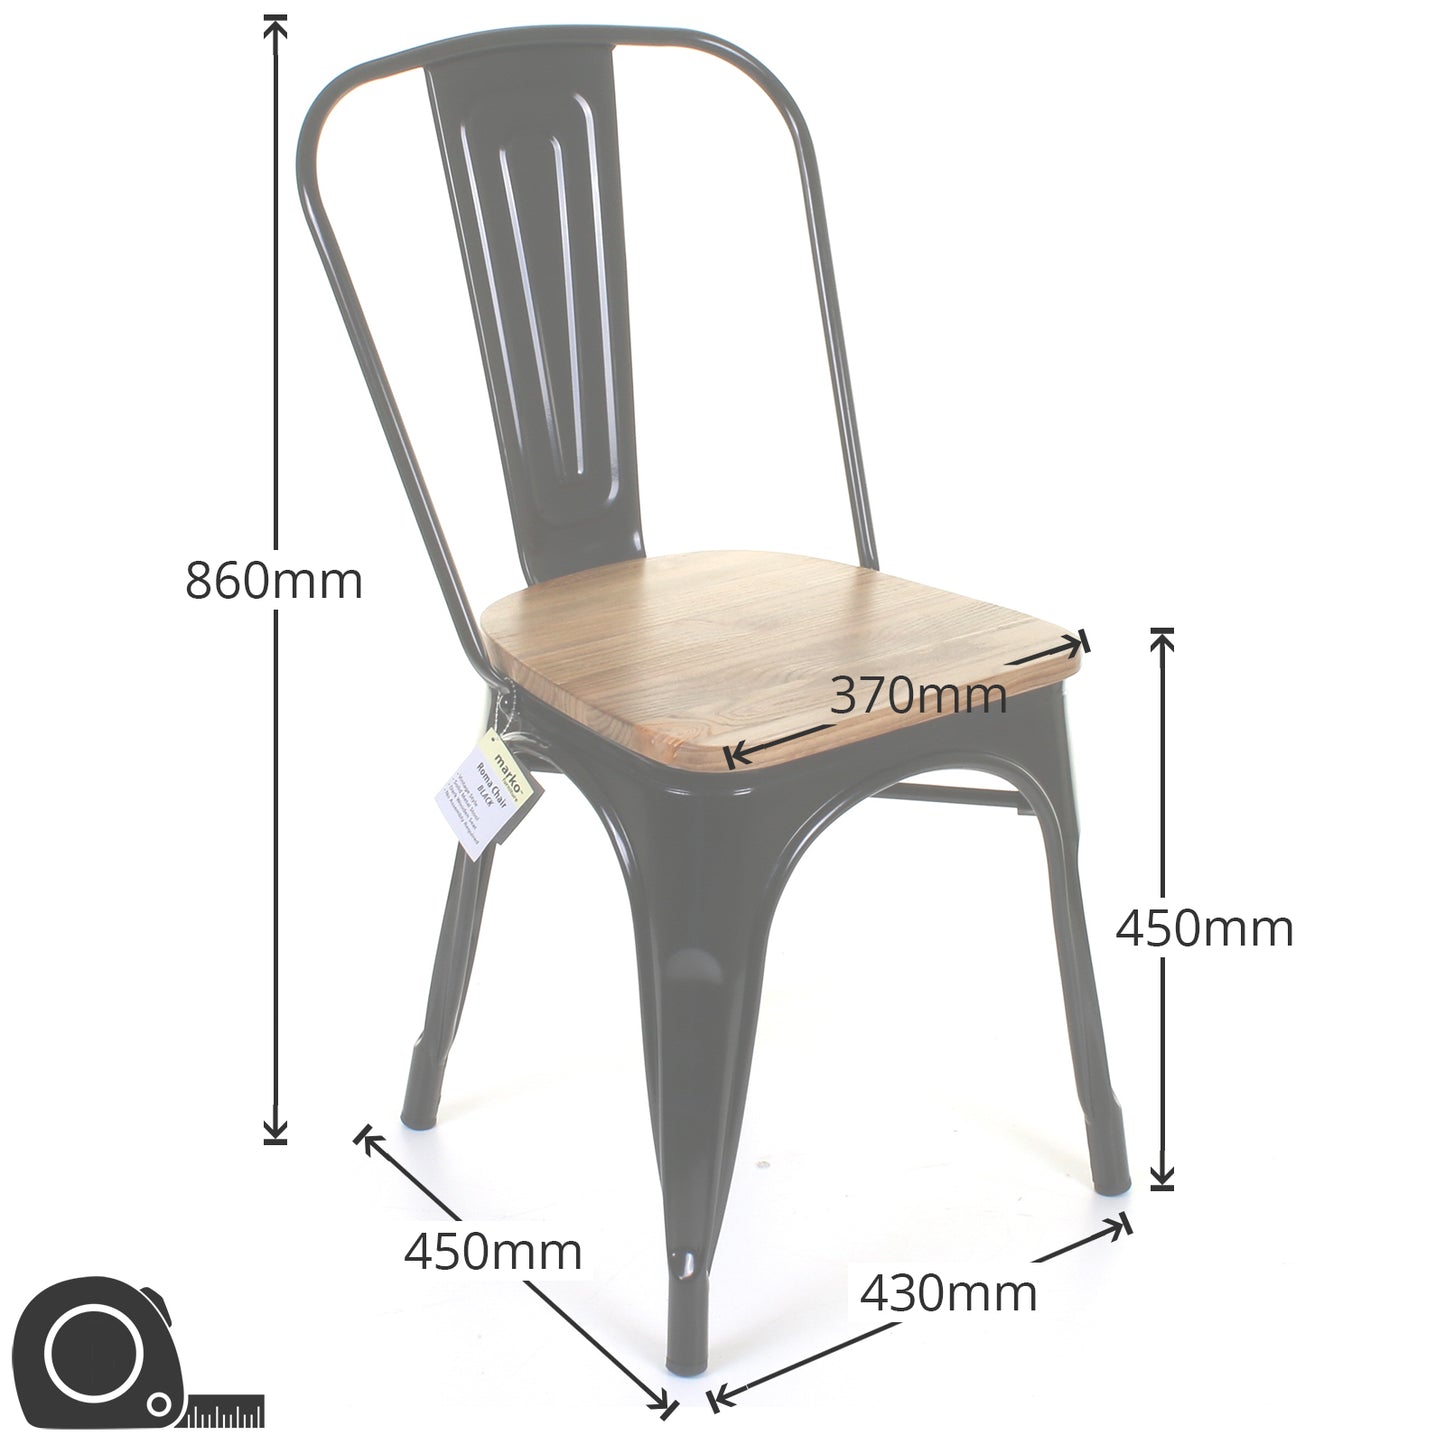 3PC Enna Table & Palermo Chair Set - Onyx Matt Black